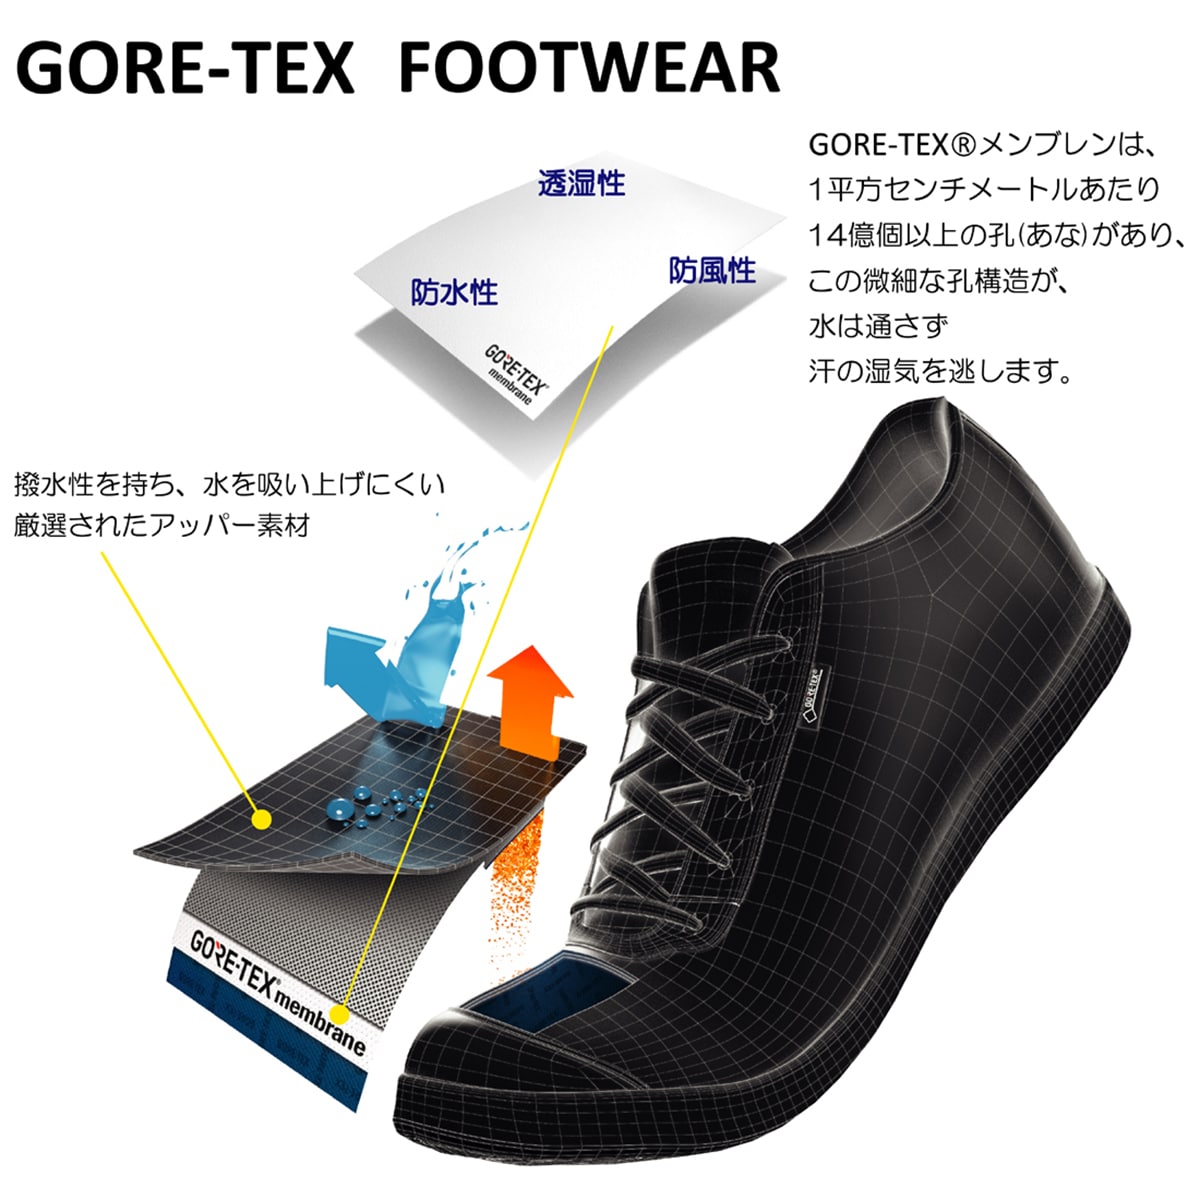 【GORE-TEX】 マドラスウォーク madras Walk ゴアテックス フットウェア 幅広ラウンドトウのプレーントウ MW5906 BLACK 25.0